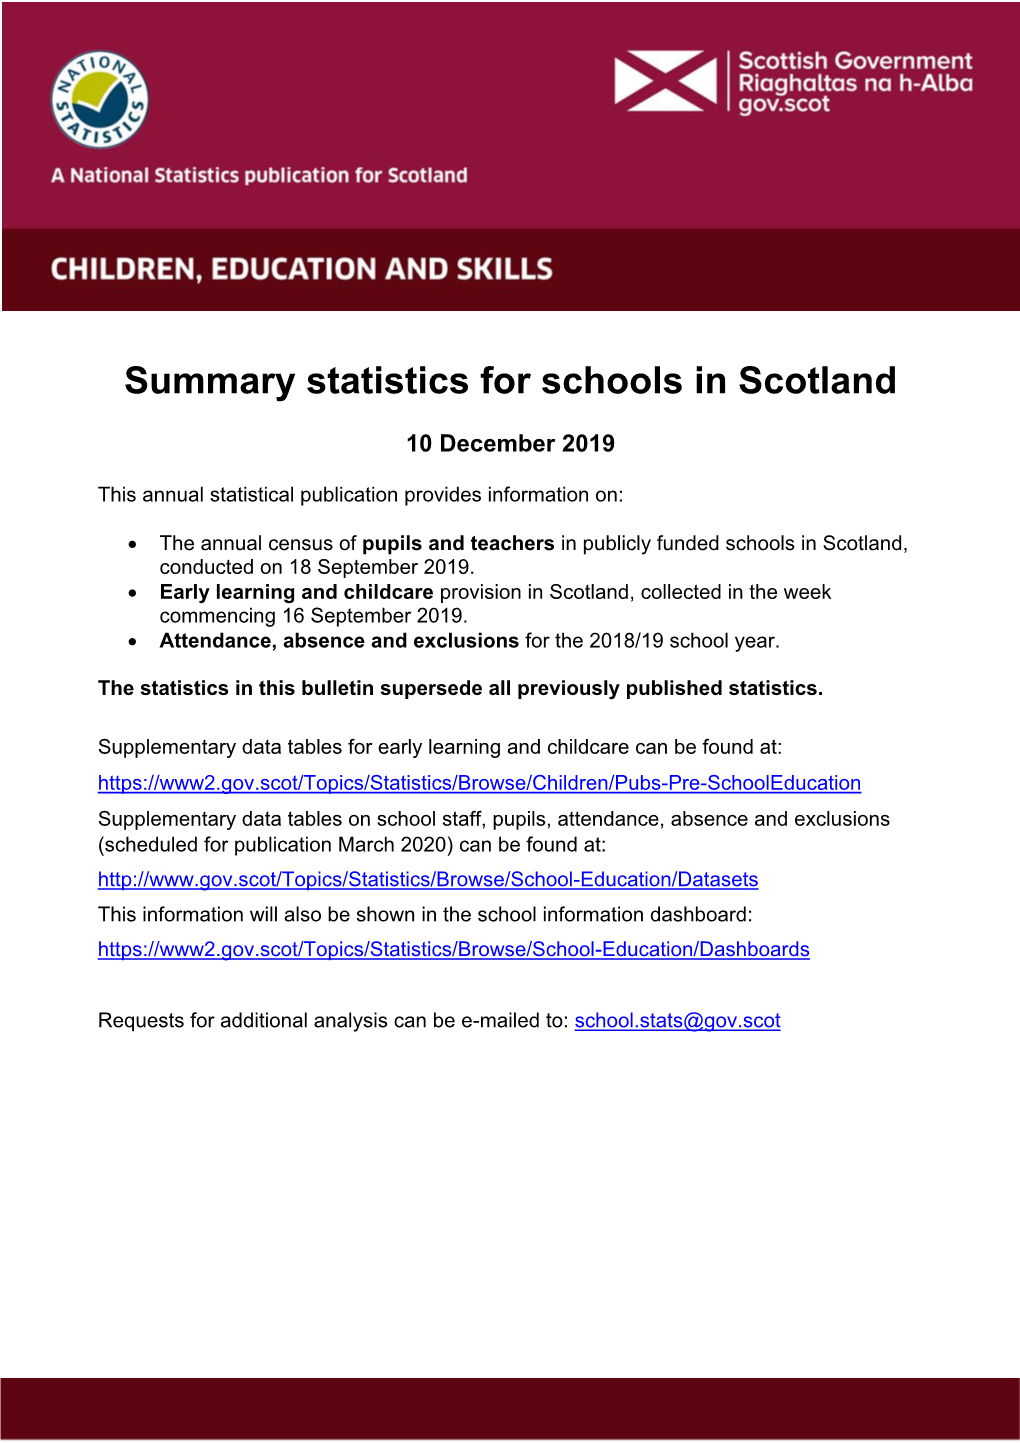 Summary Statistics for Schools in Scotland